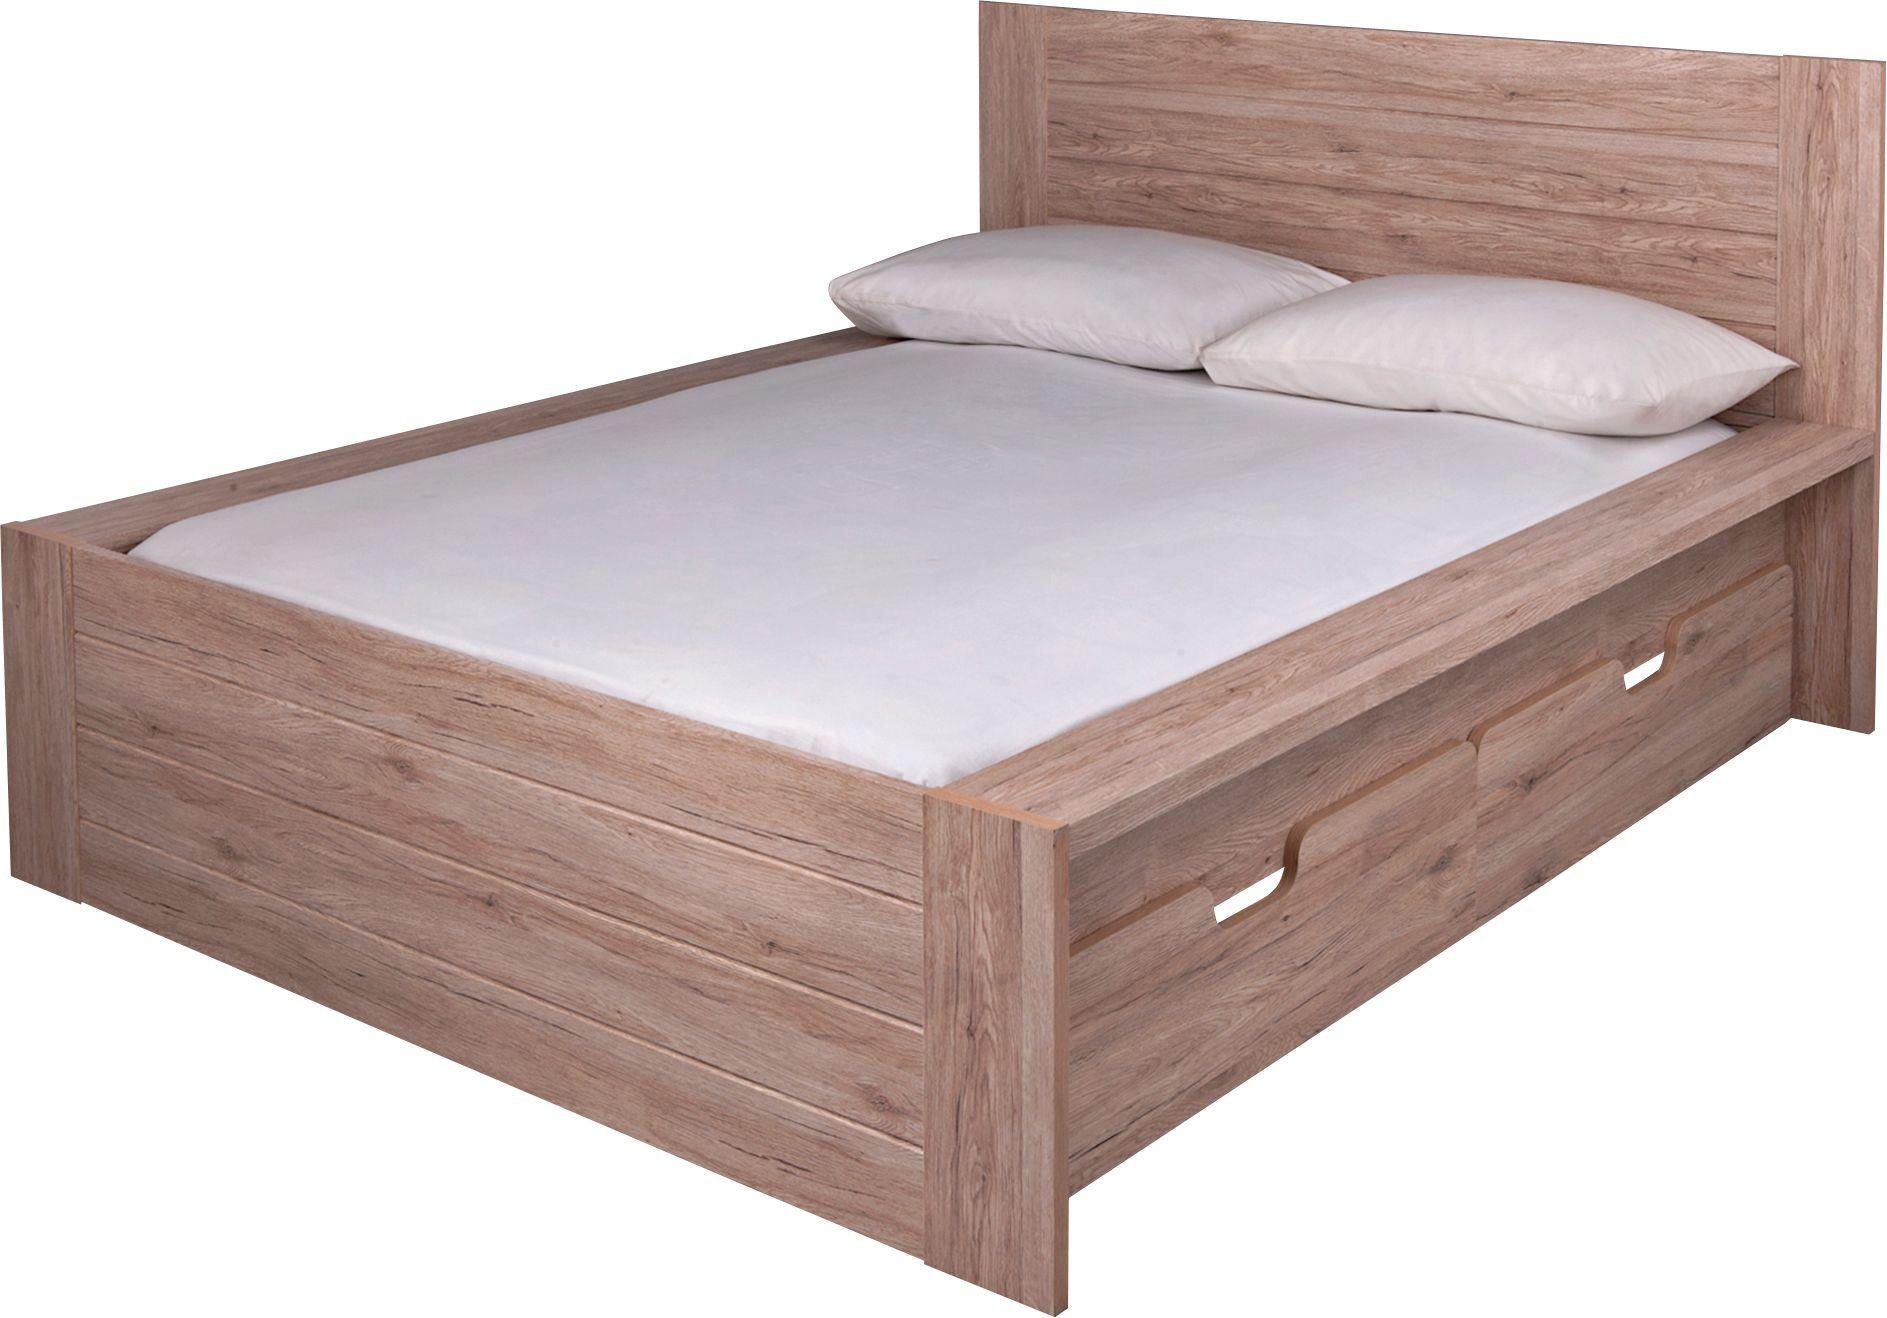 Argos Home Seattle Double 2 Drawer Bed Frame - Warm Oak